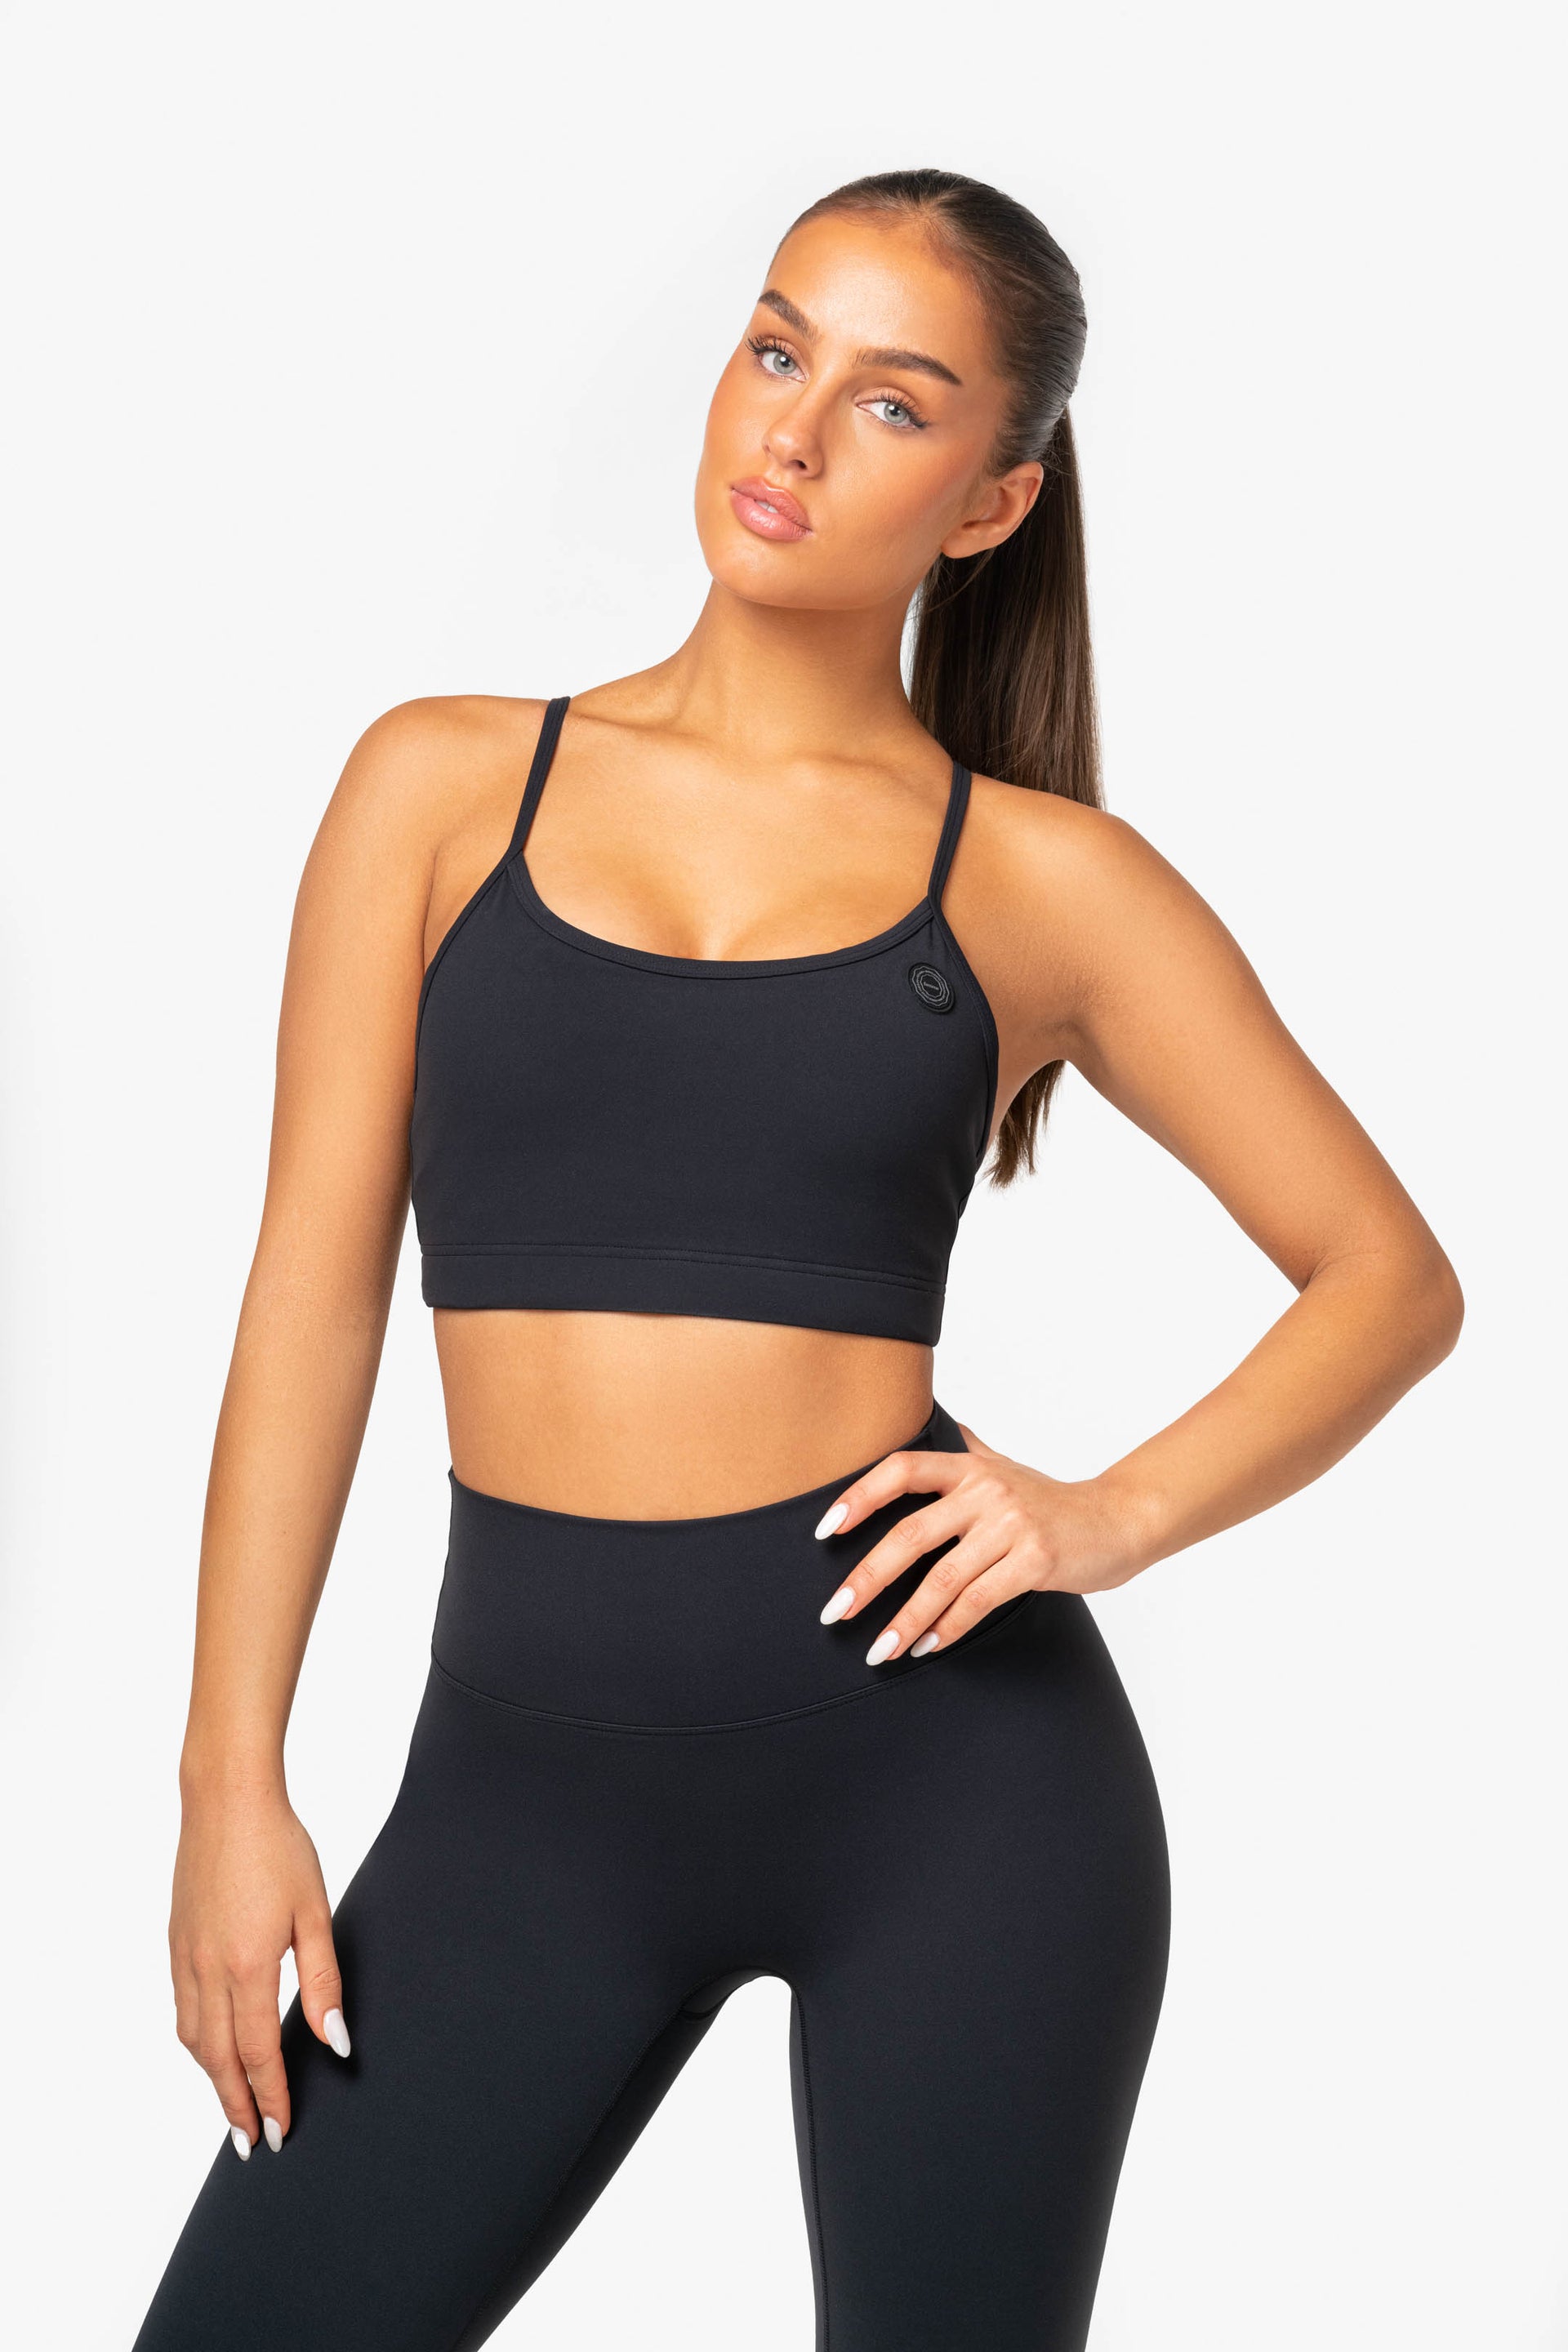 BOOTY Yoga bra - medium support BLACK  Womens Etam Sport Bras • Tango Aqui